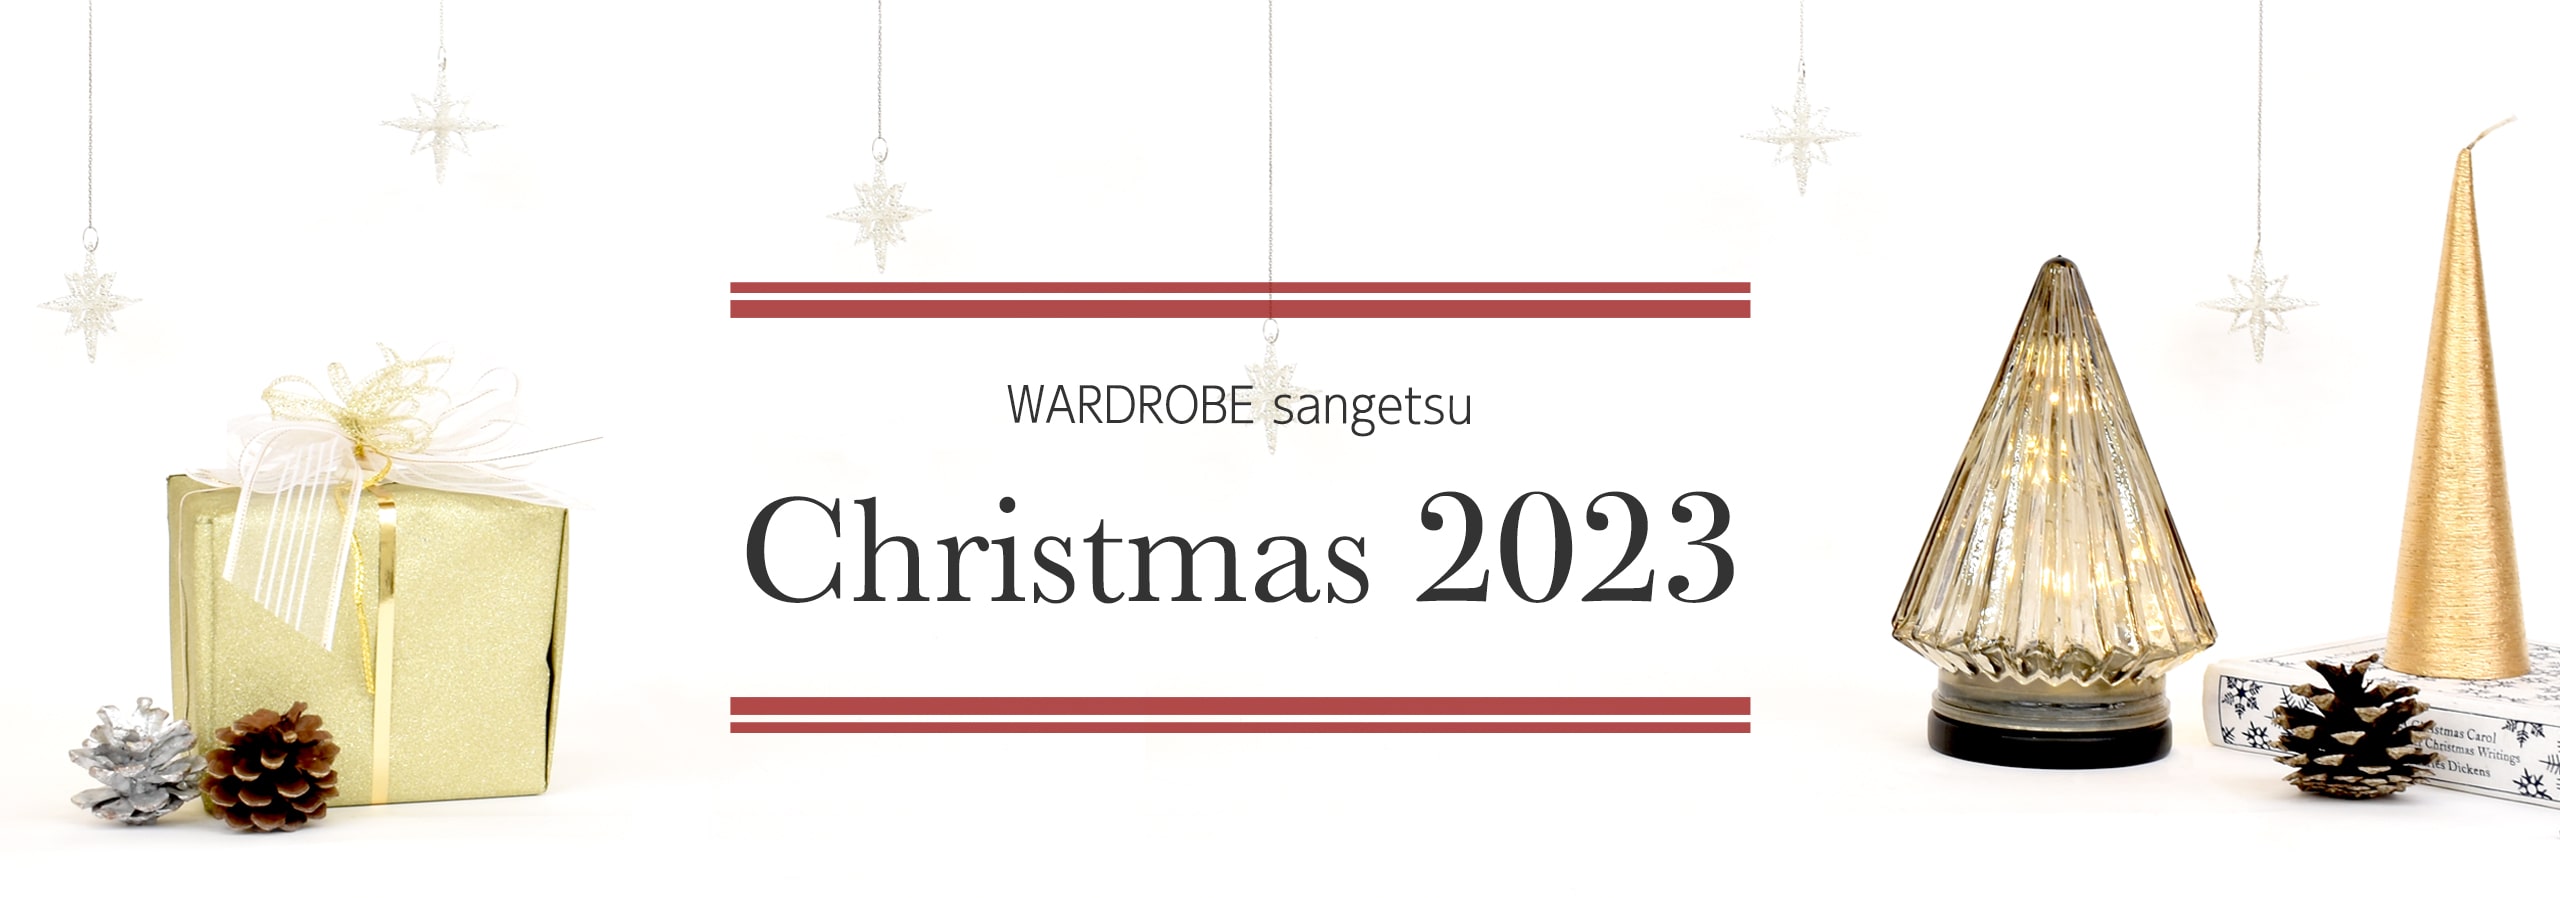 WARDROBE sangetsu Christmas 2023